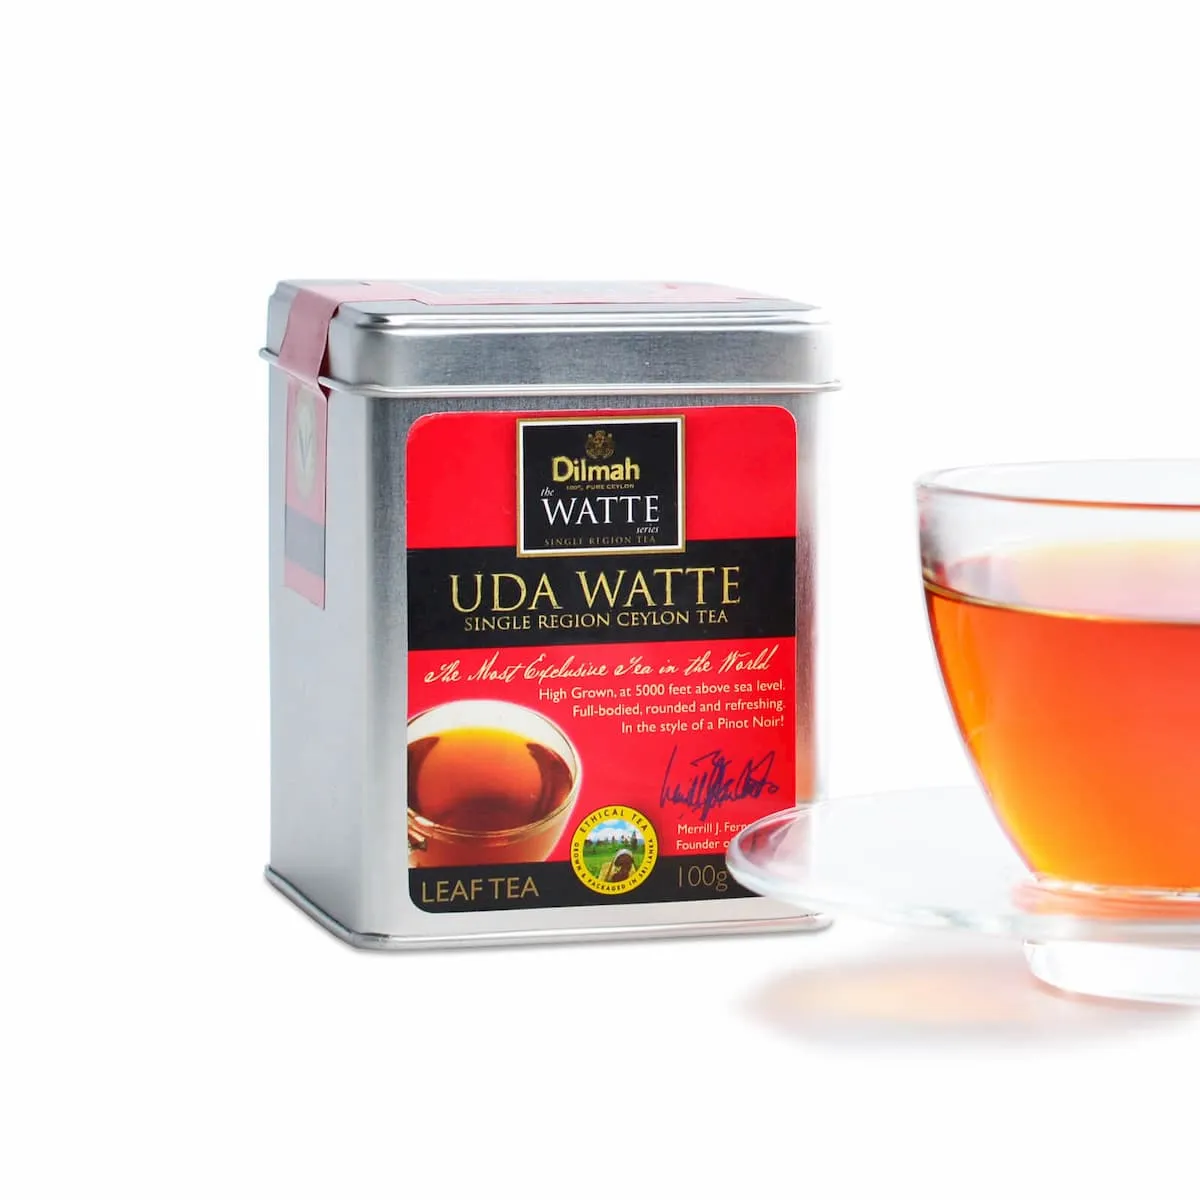 Loose leaf Uda Watte black tea in tin